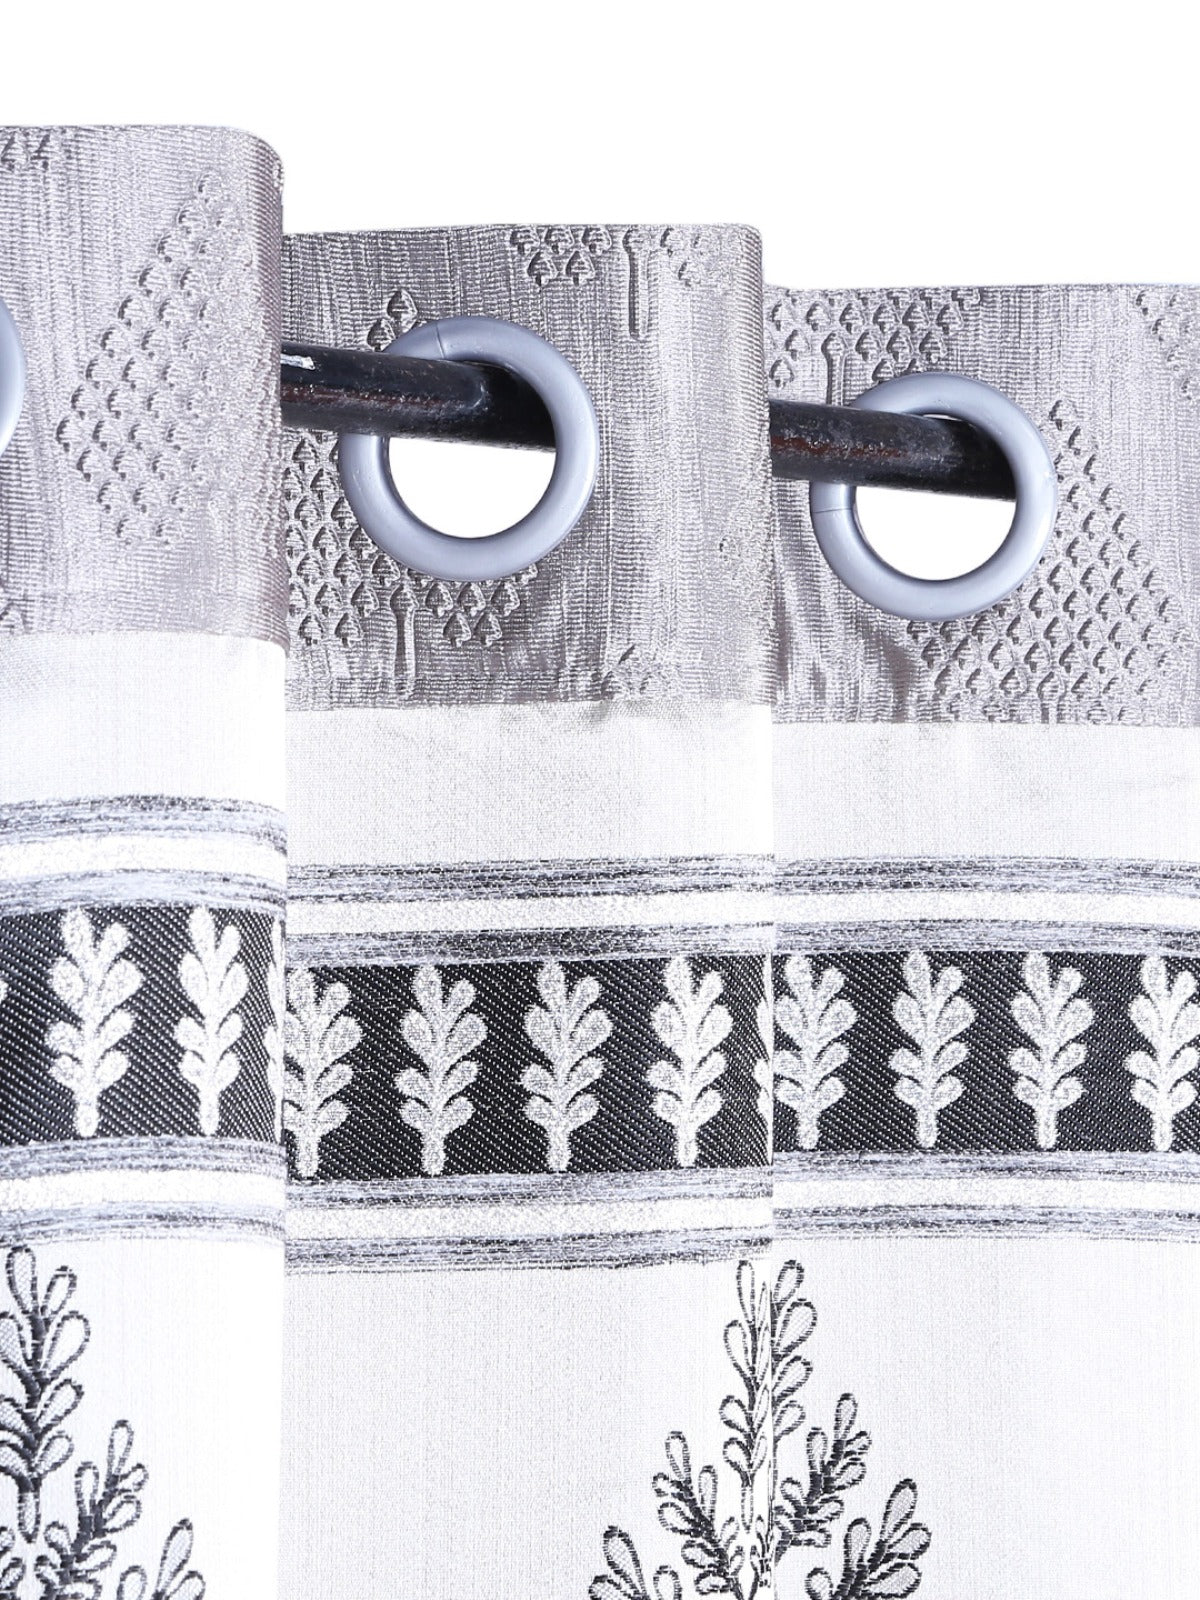 Romee Grey Jacquard Set of 1 Curtain Door Curtains